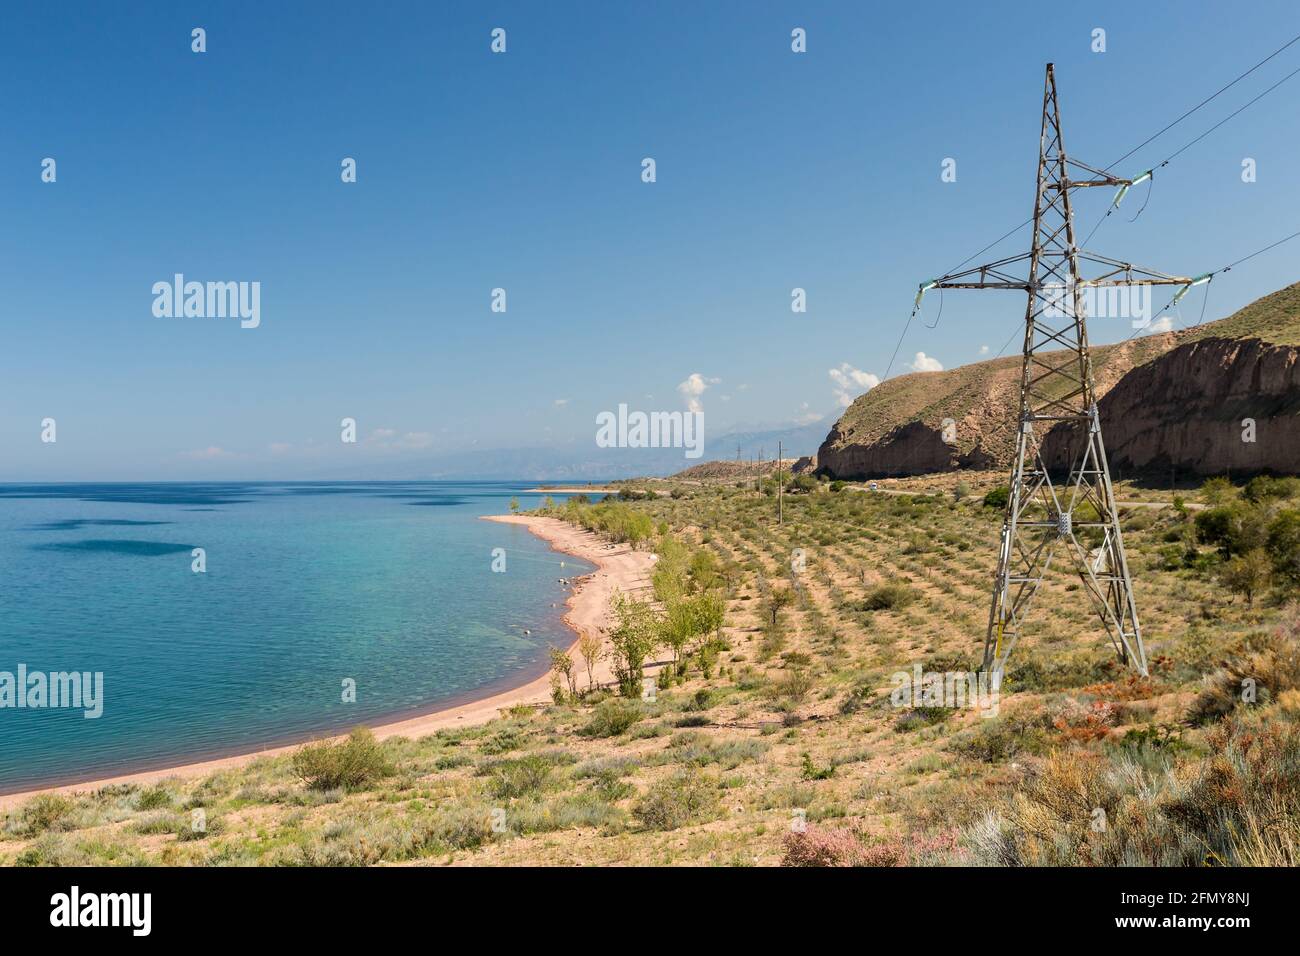 The southern shore of the Issyk Kul lake. Kyrgyzstan. The power line runs near the lake. Electricity pylon Stock Photo